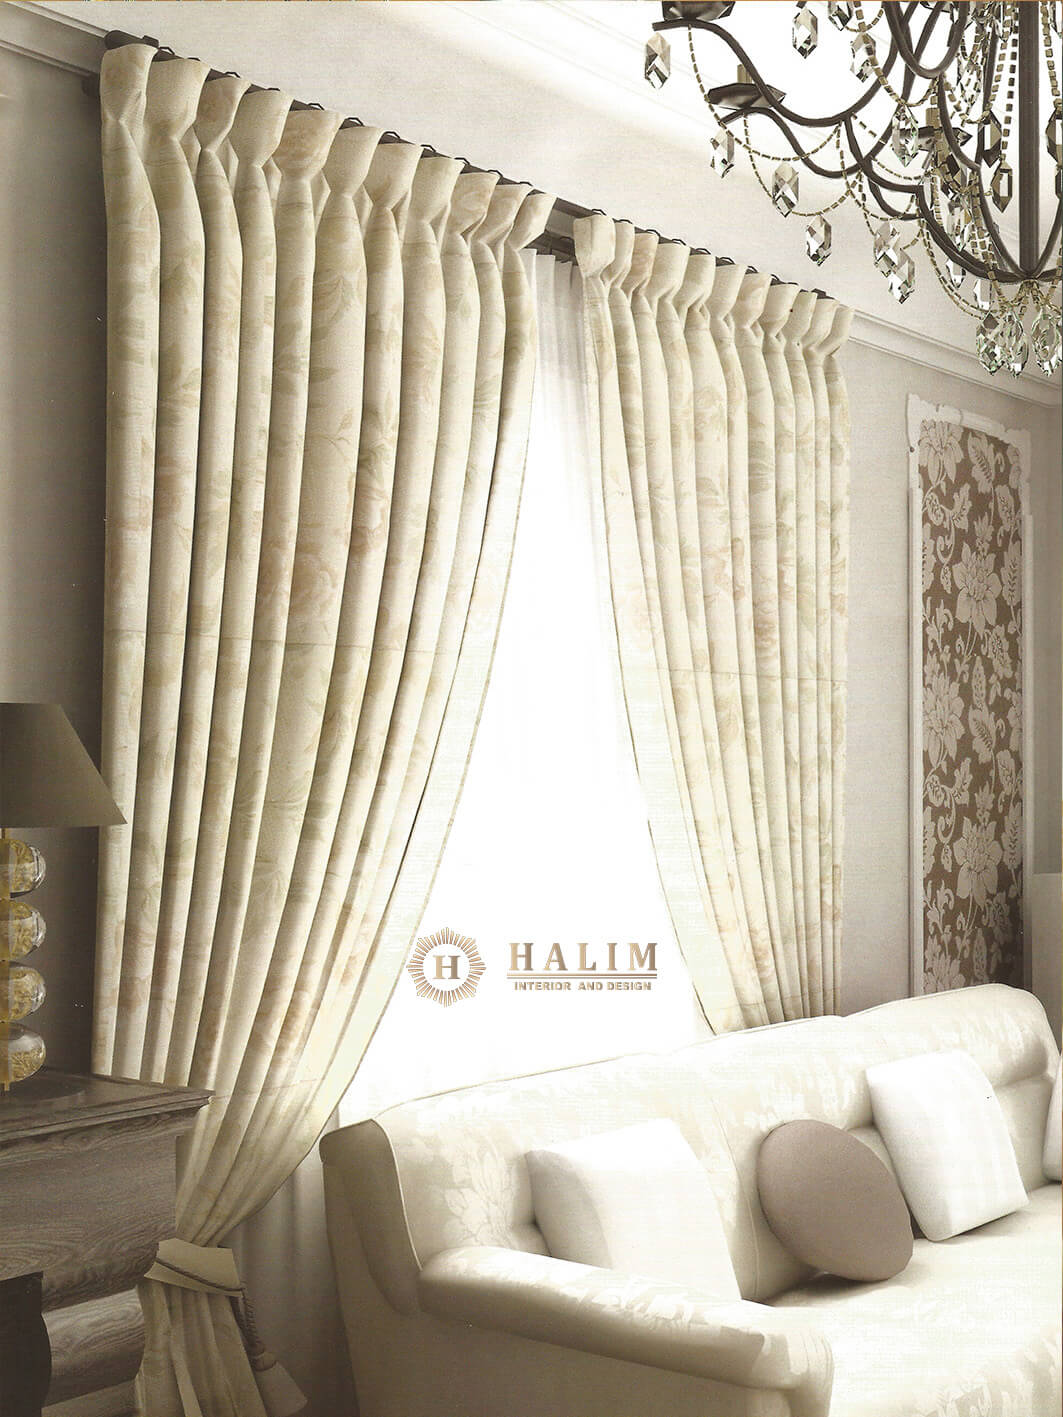 Halim Interior modern furniture contemporer american style minimalist european classic surabaya Curtain 6 1